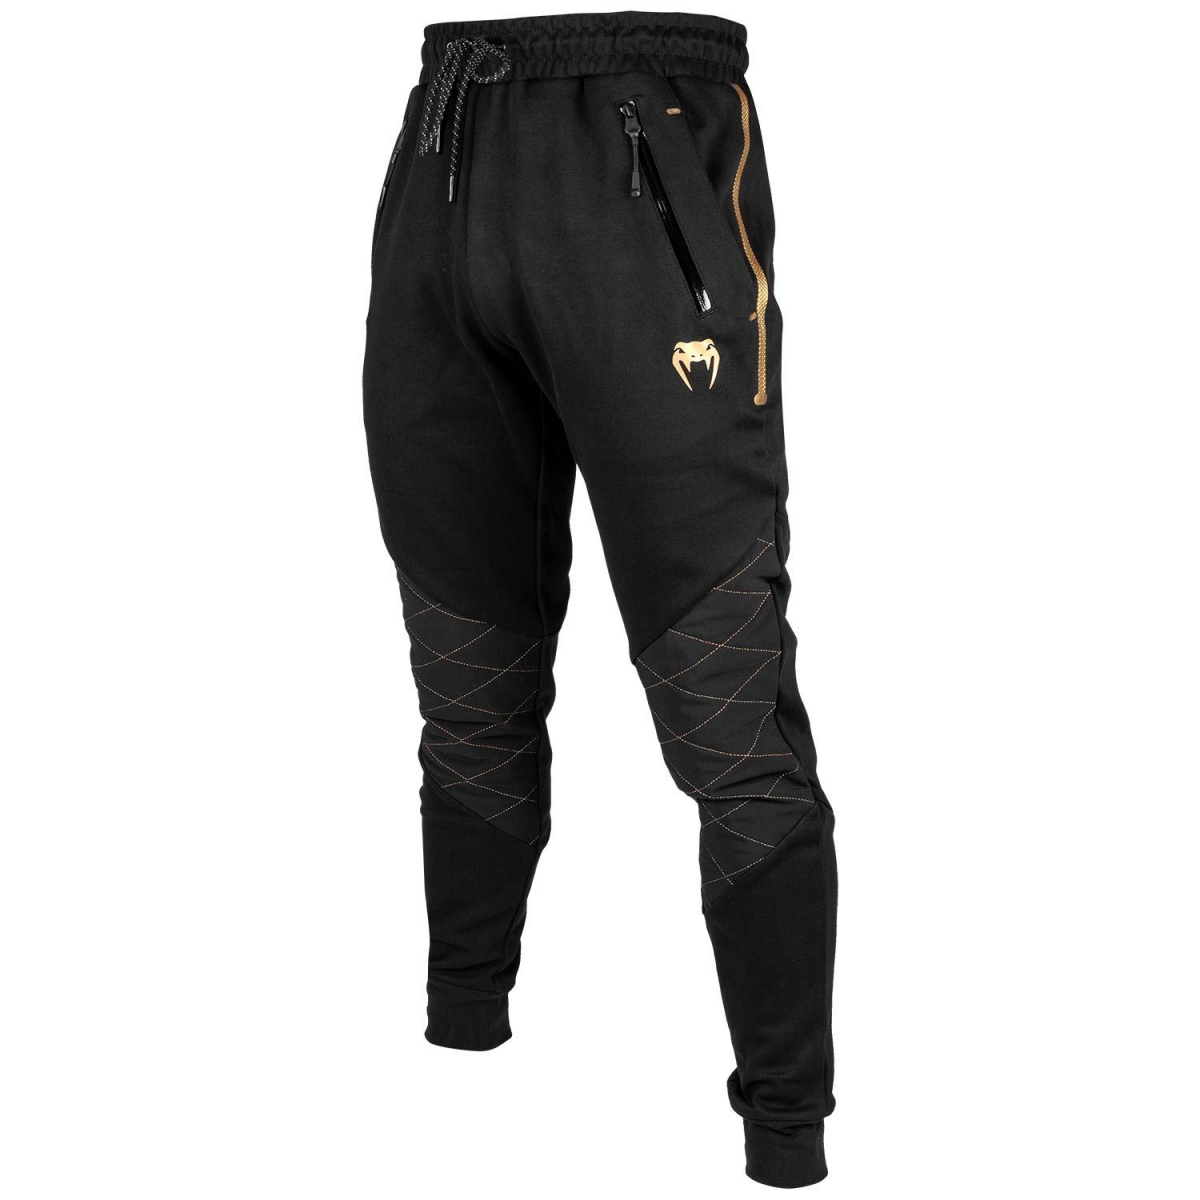 Спортивные штаны Venum Laser Evo Joggings Black Gold